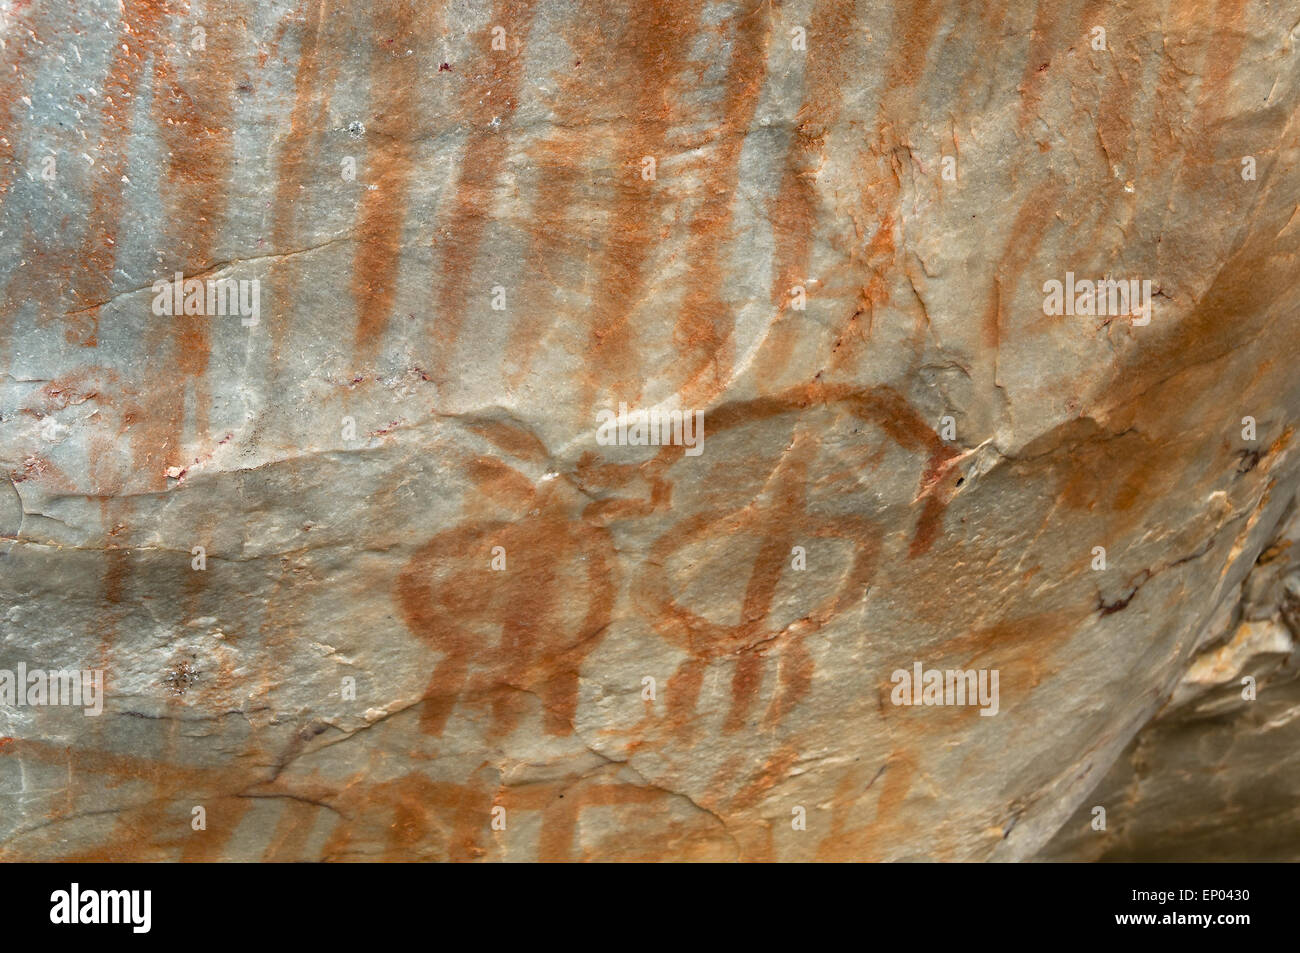 Vista schematica i dipinti rupestri, periodo calcolitico, Arroyo de San Servan, Badajoz, Estremadura, Spagna, Europa Foto Stock